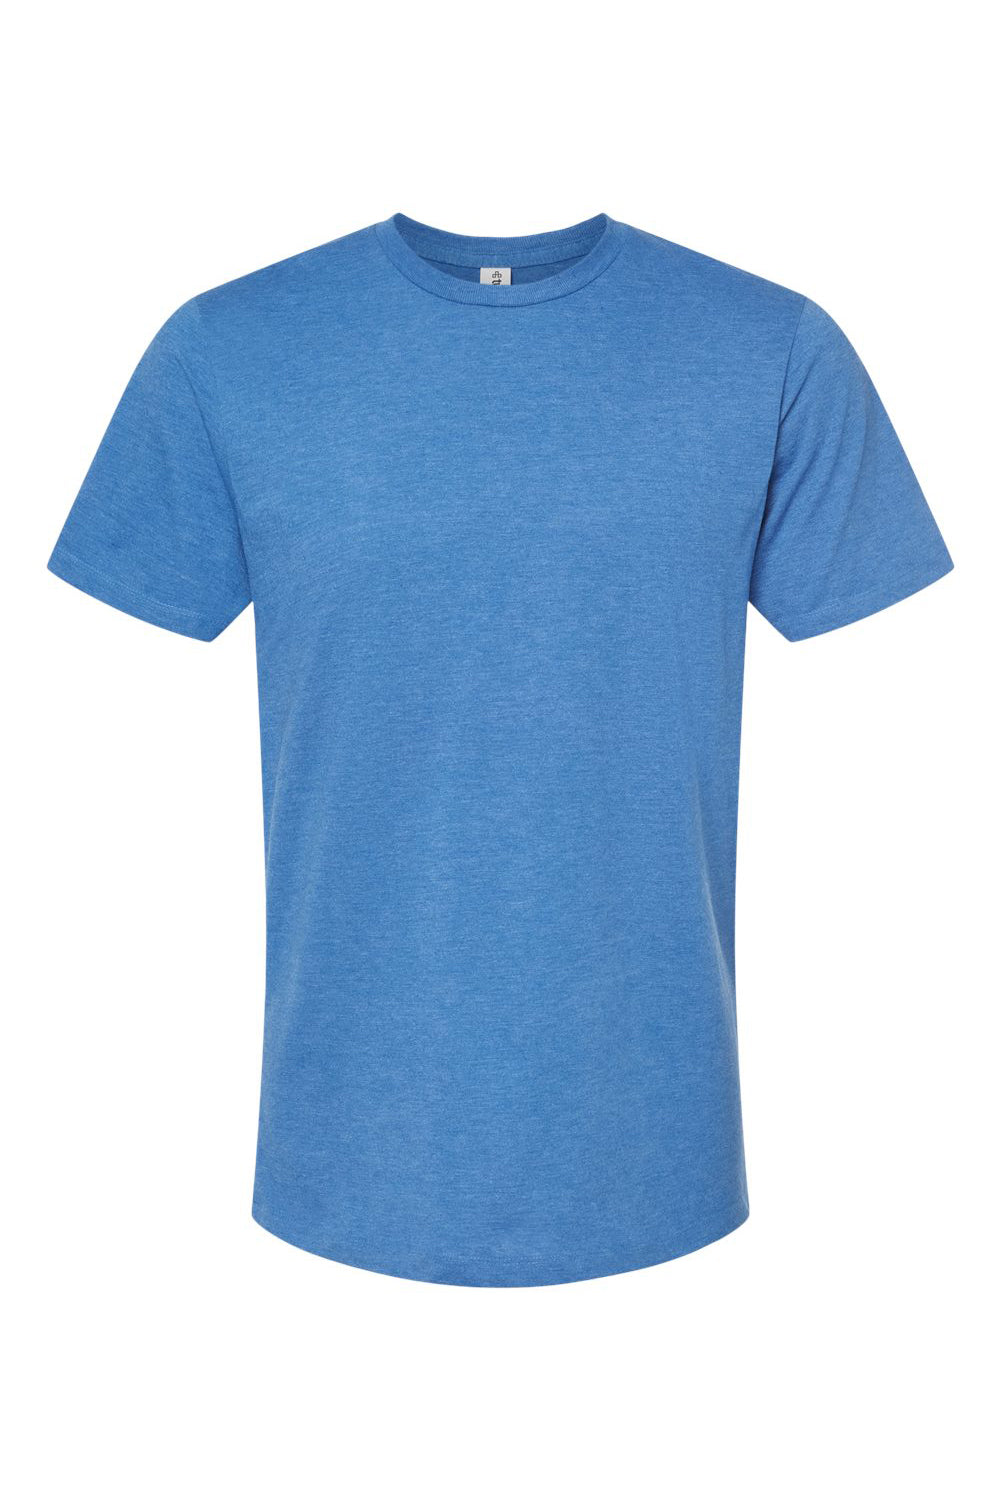 Tultex 541 Mens Premium Short Sleeve Crewneck T-Shirt Heather Royal Blue Flat Front